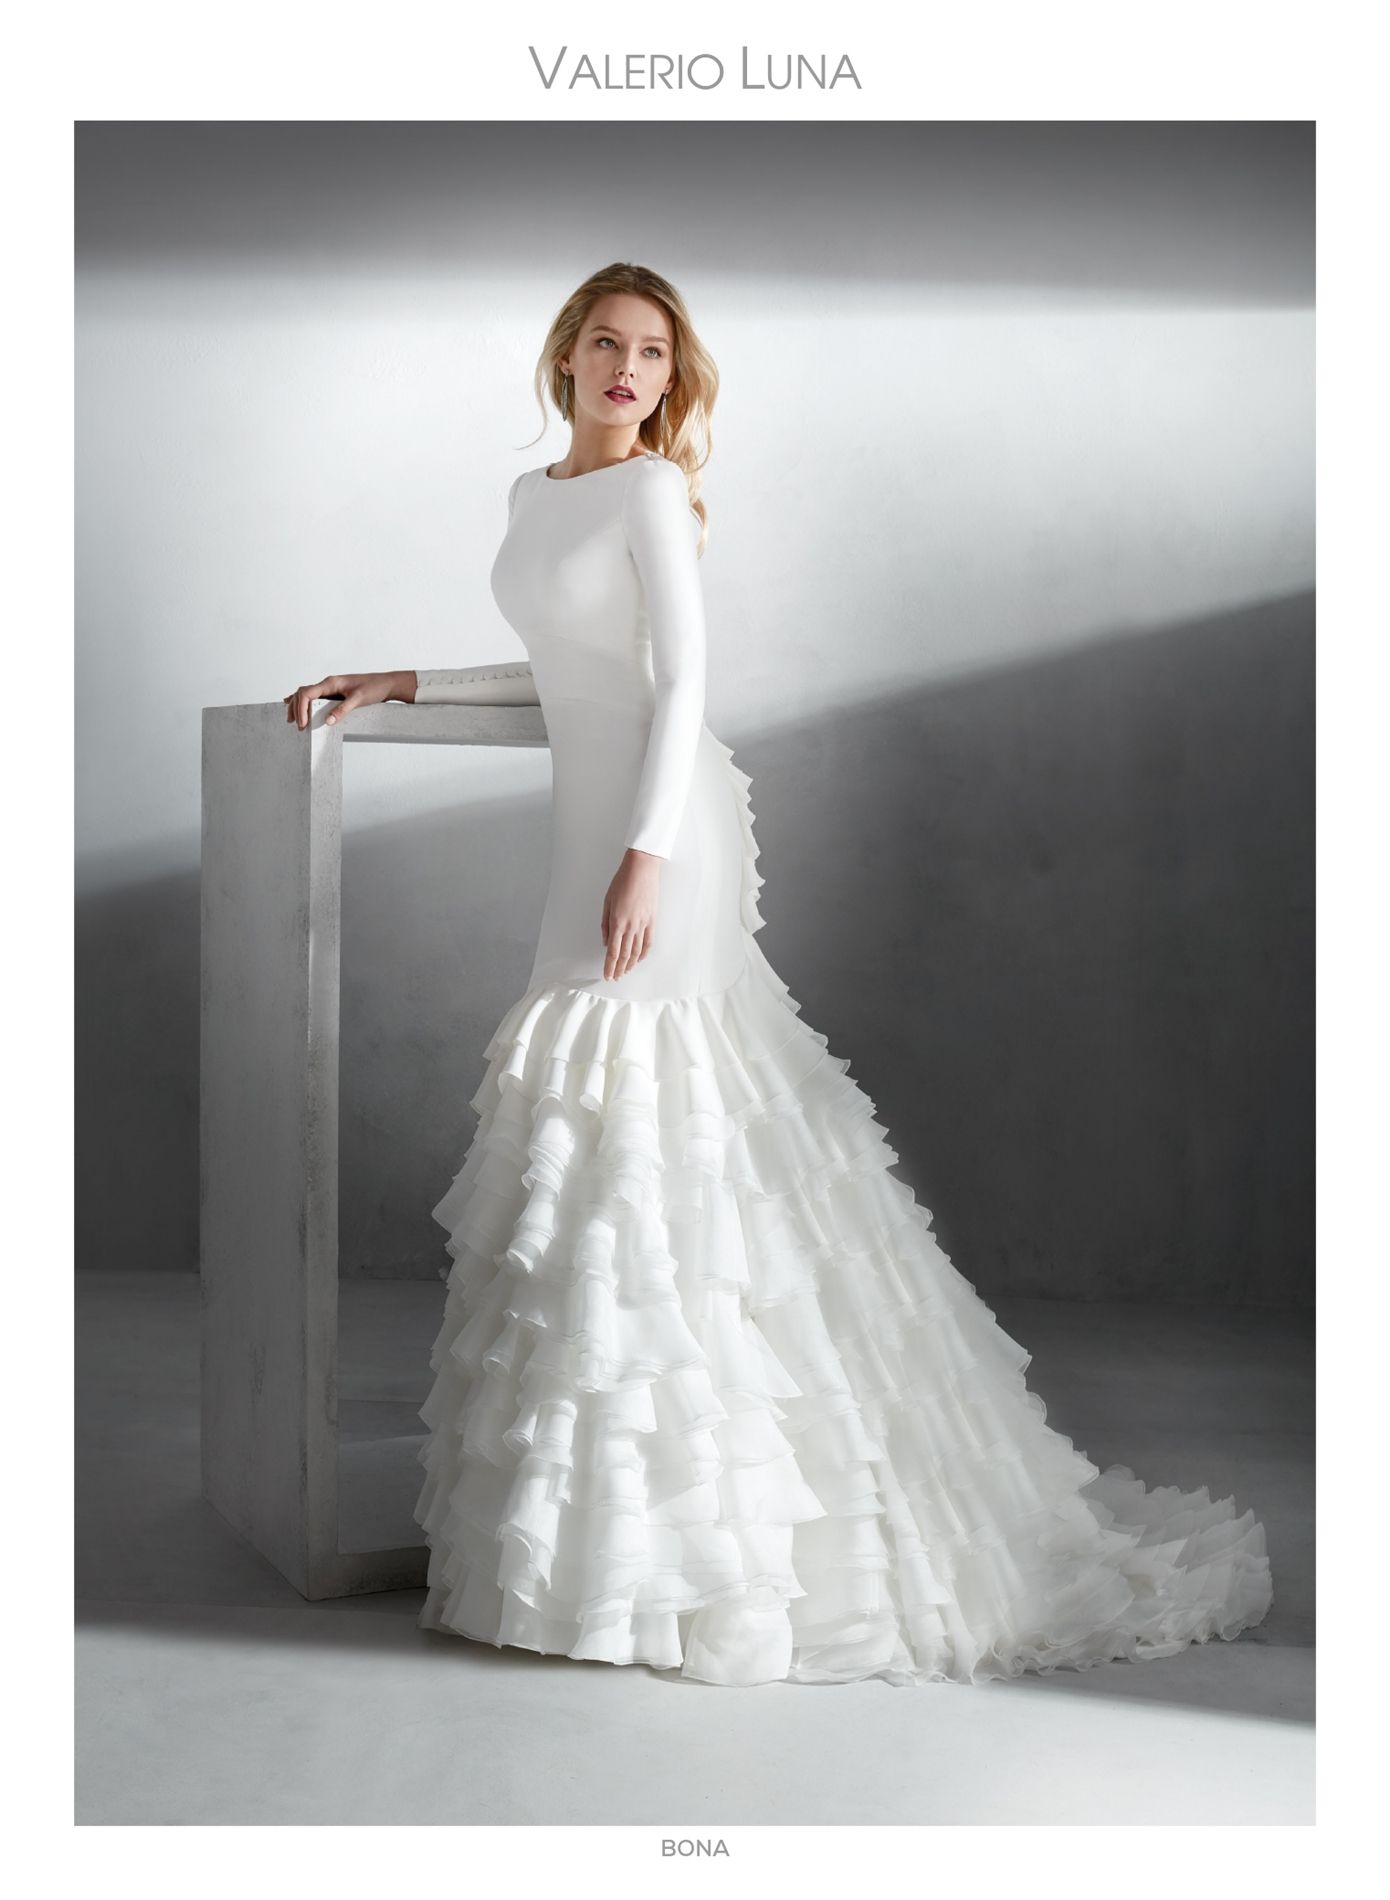 BONA - Wedding dresses | Valerio Luna